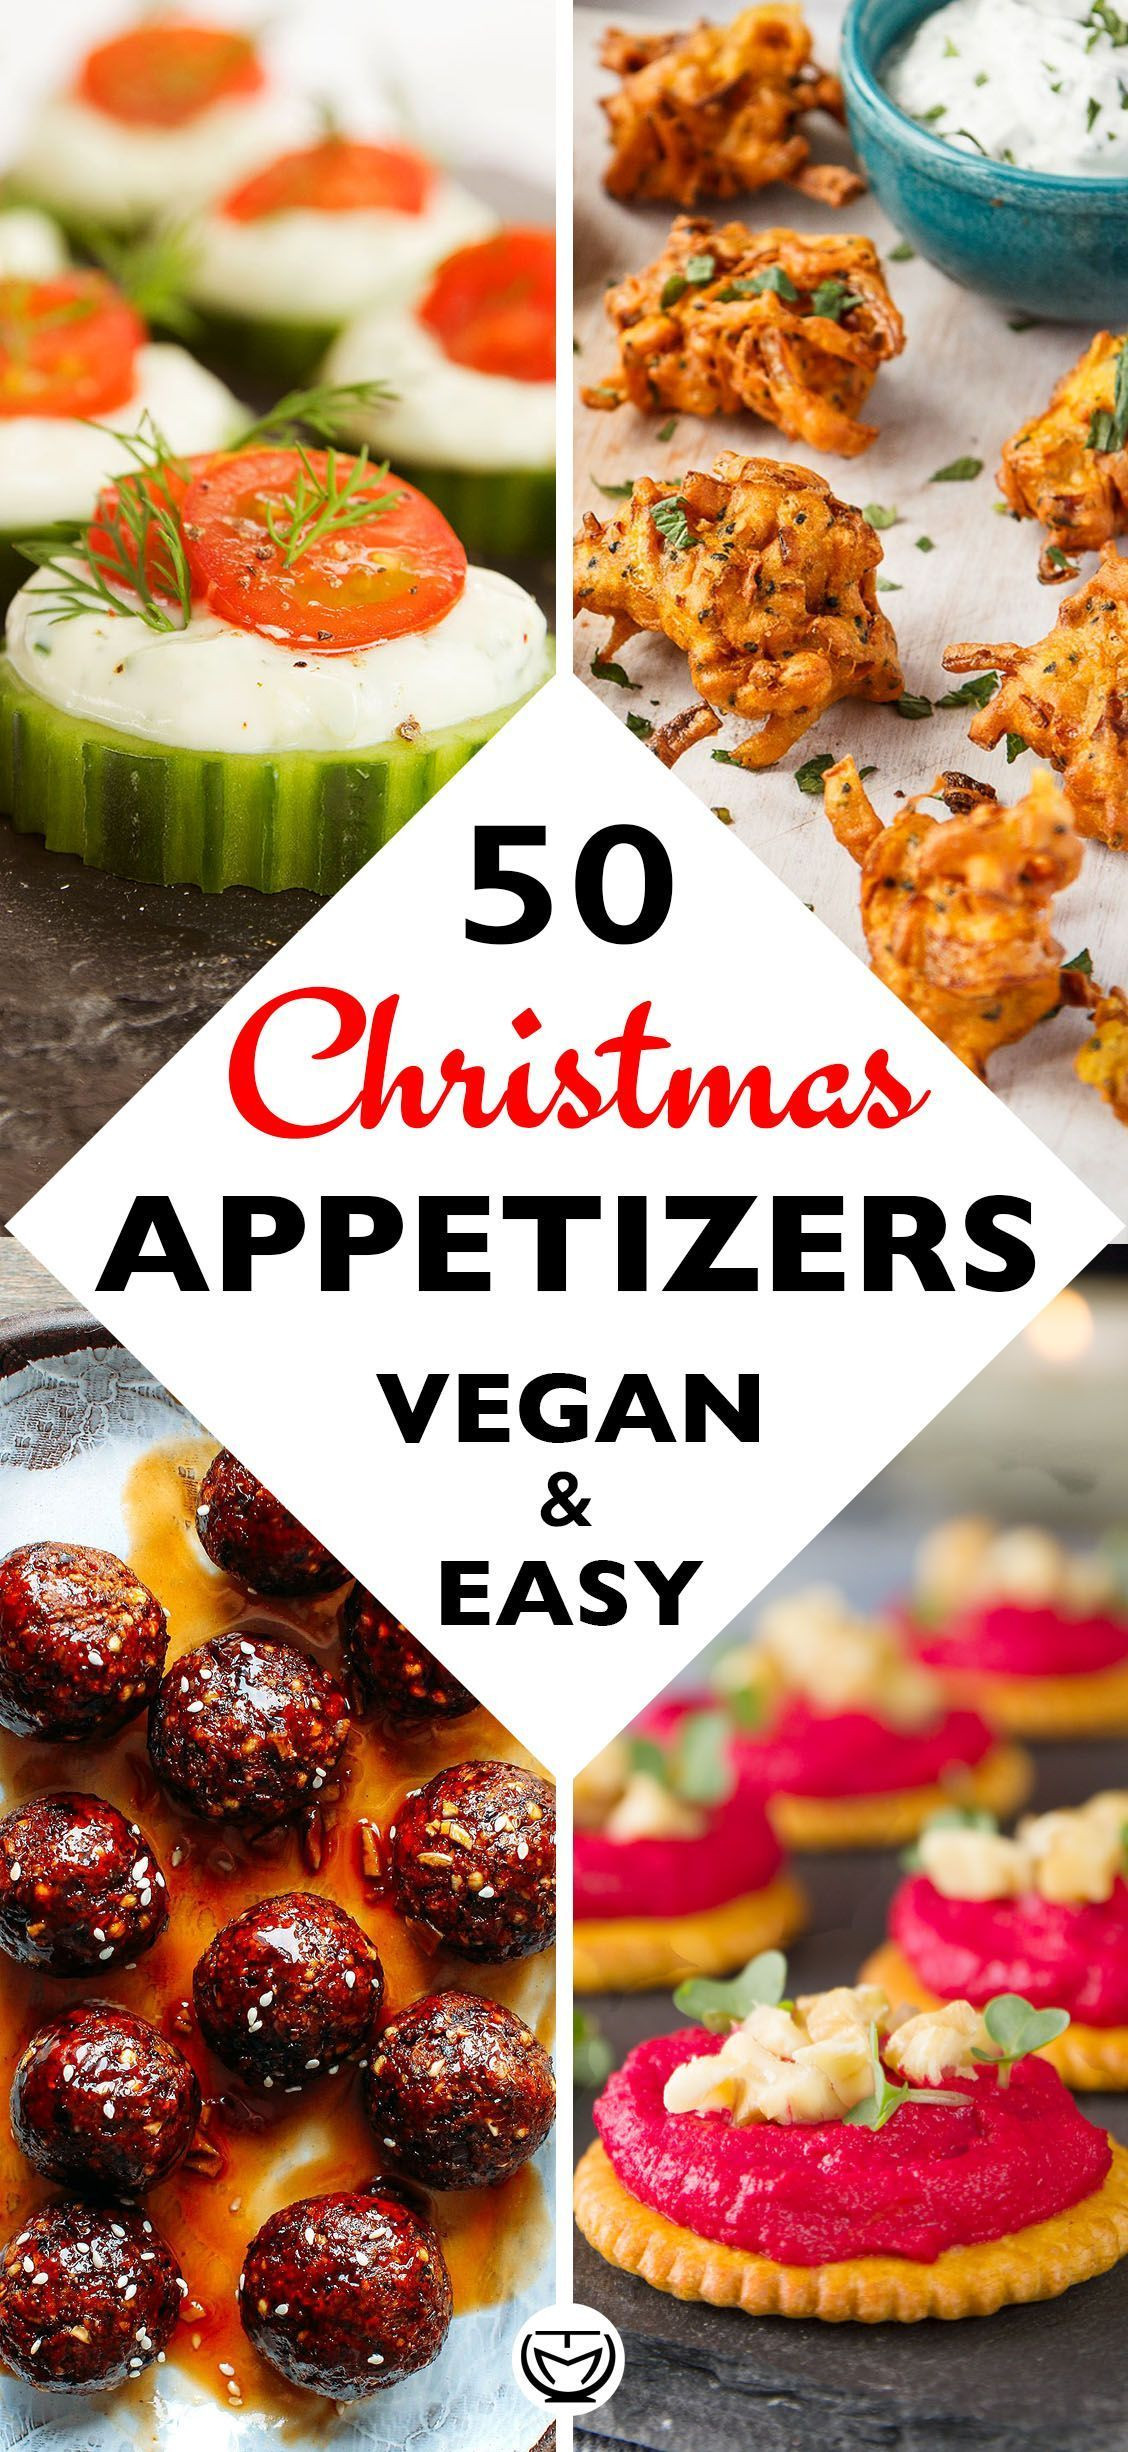 Vegan Appetizer Recipes Cocktail Party
 50 Delicious and easy vegan appetizers appetizers